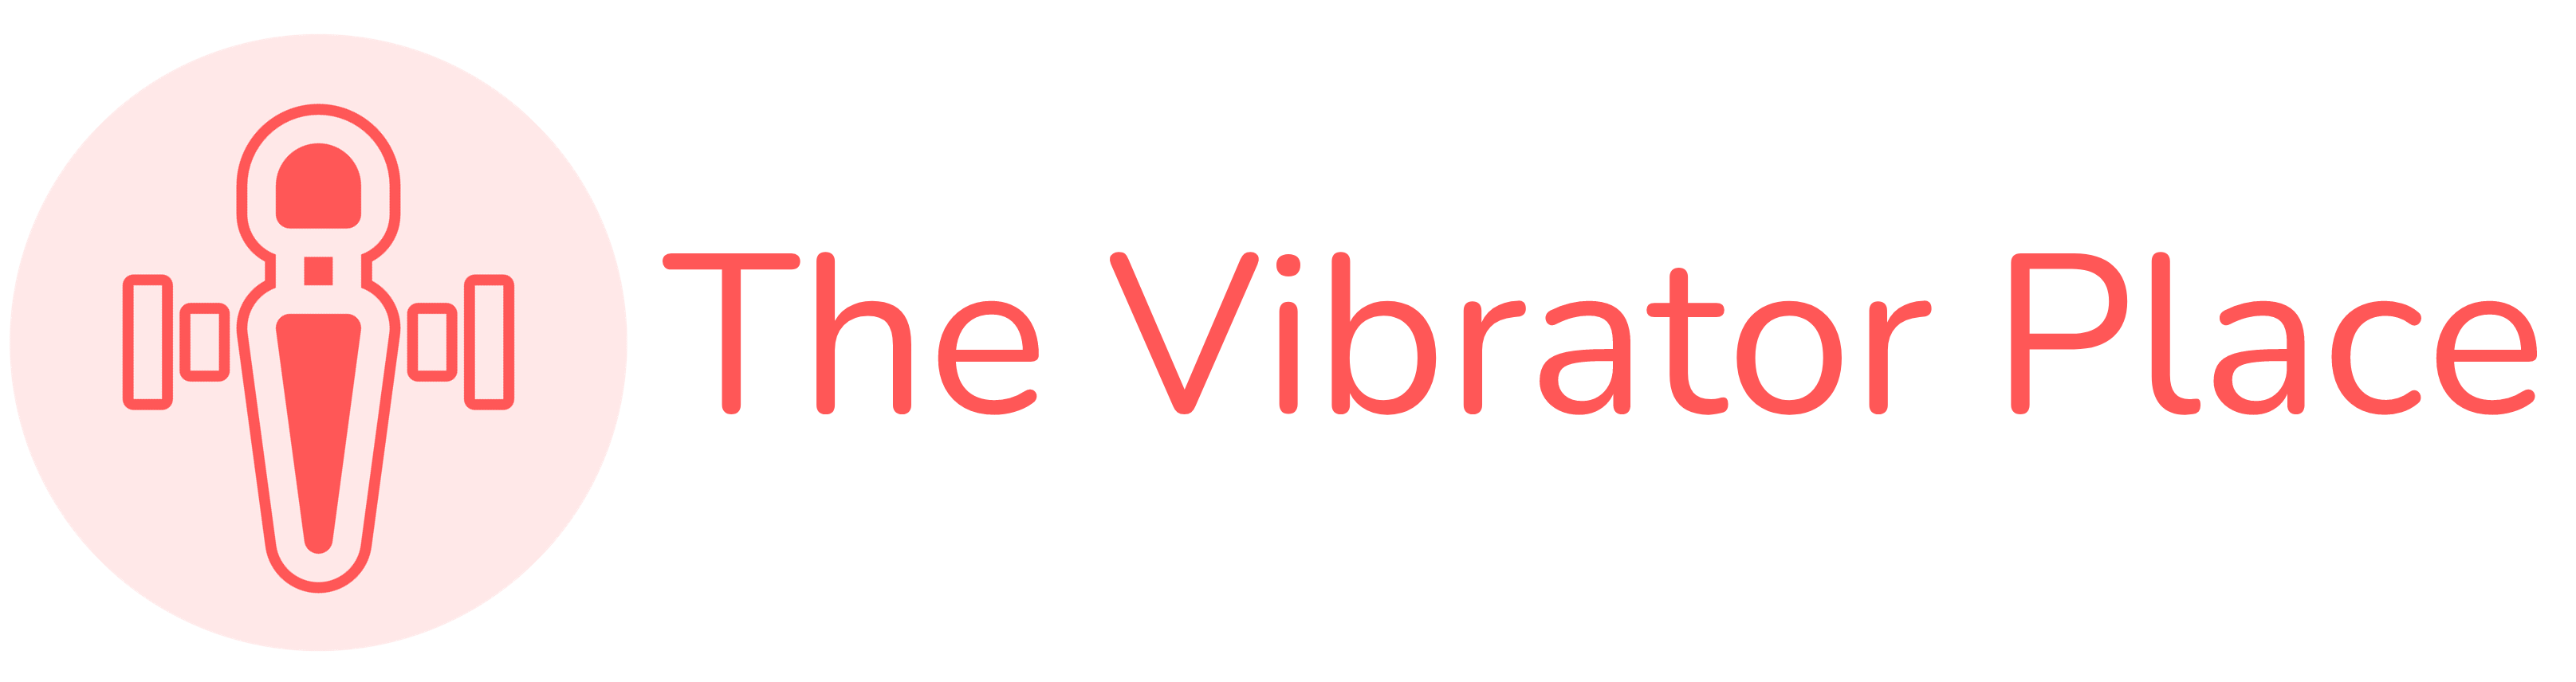 The Vibrator Place